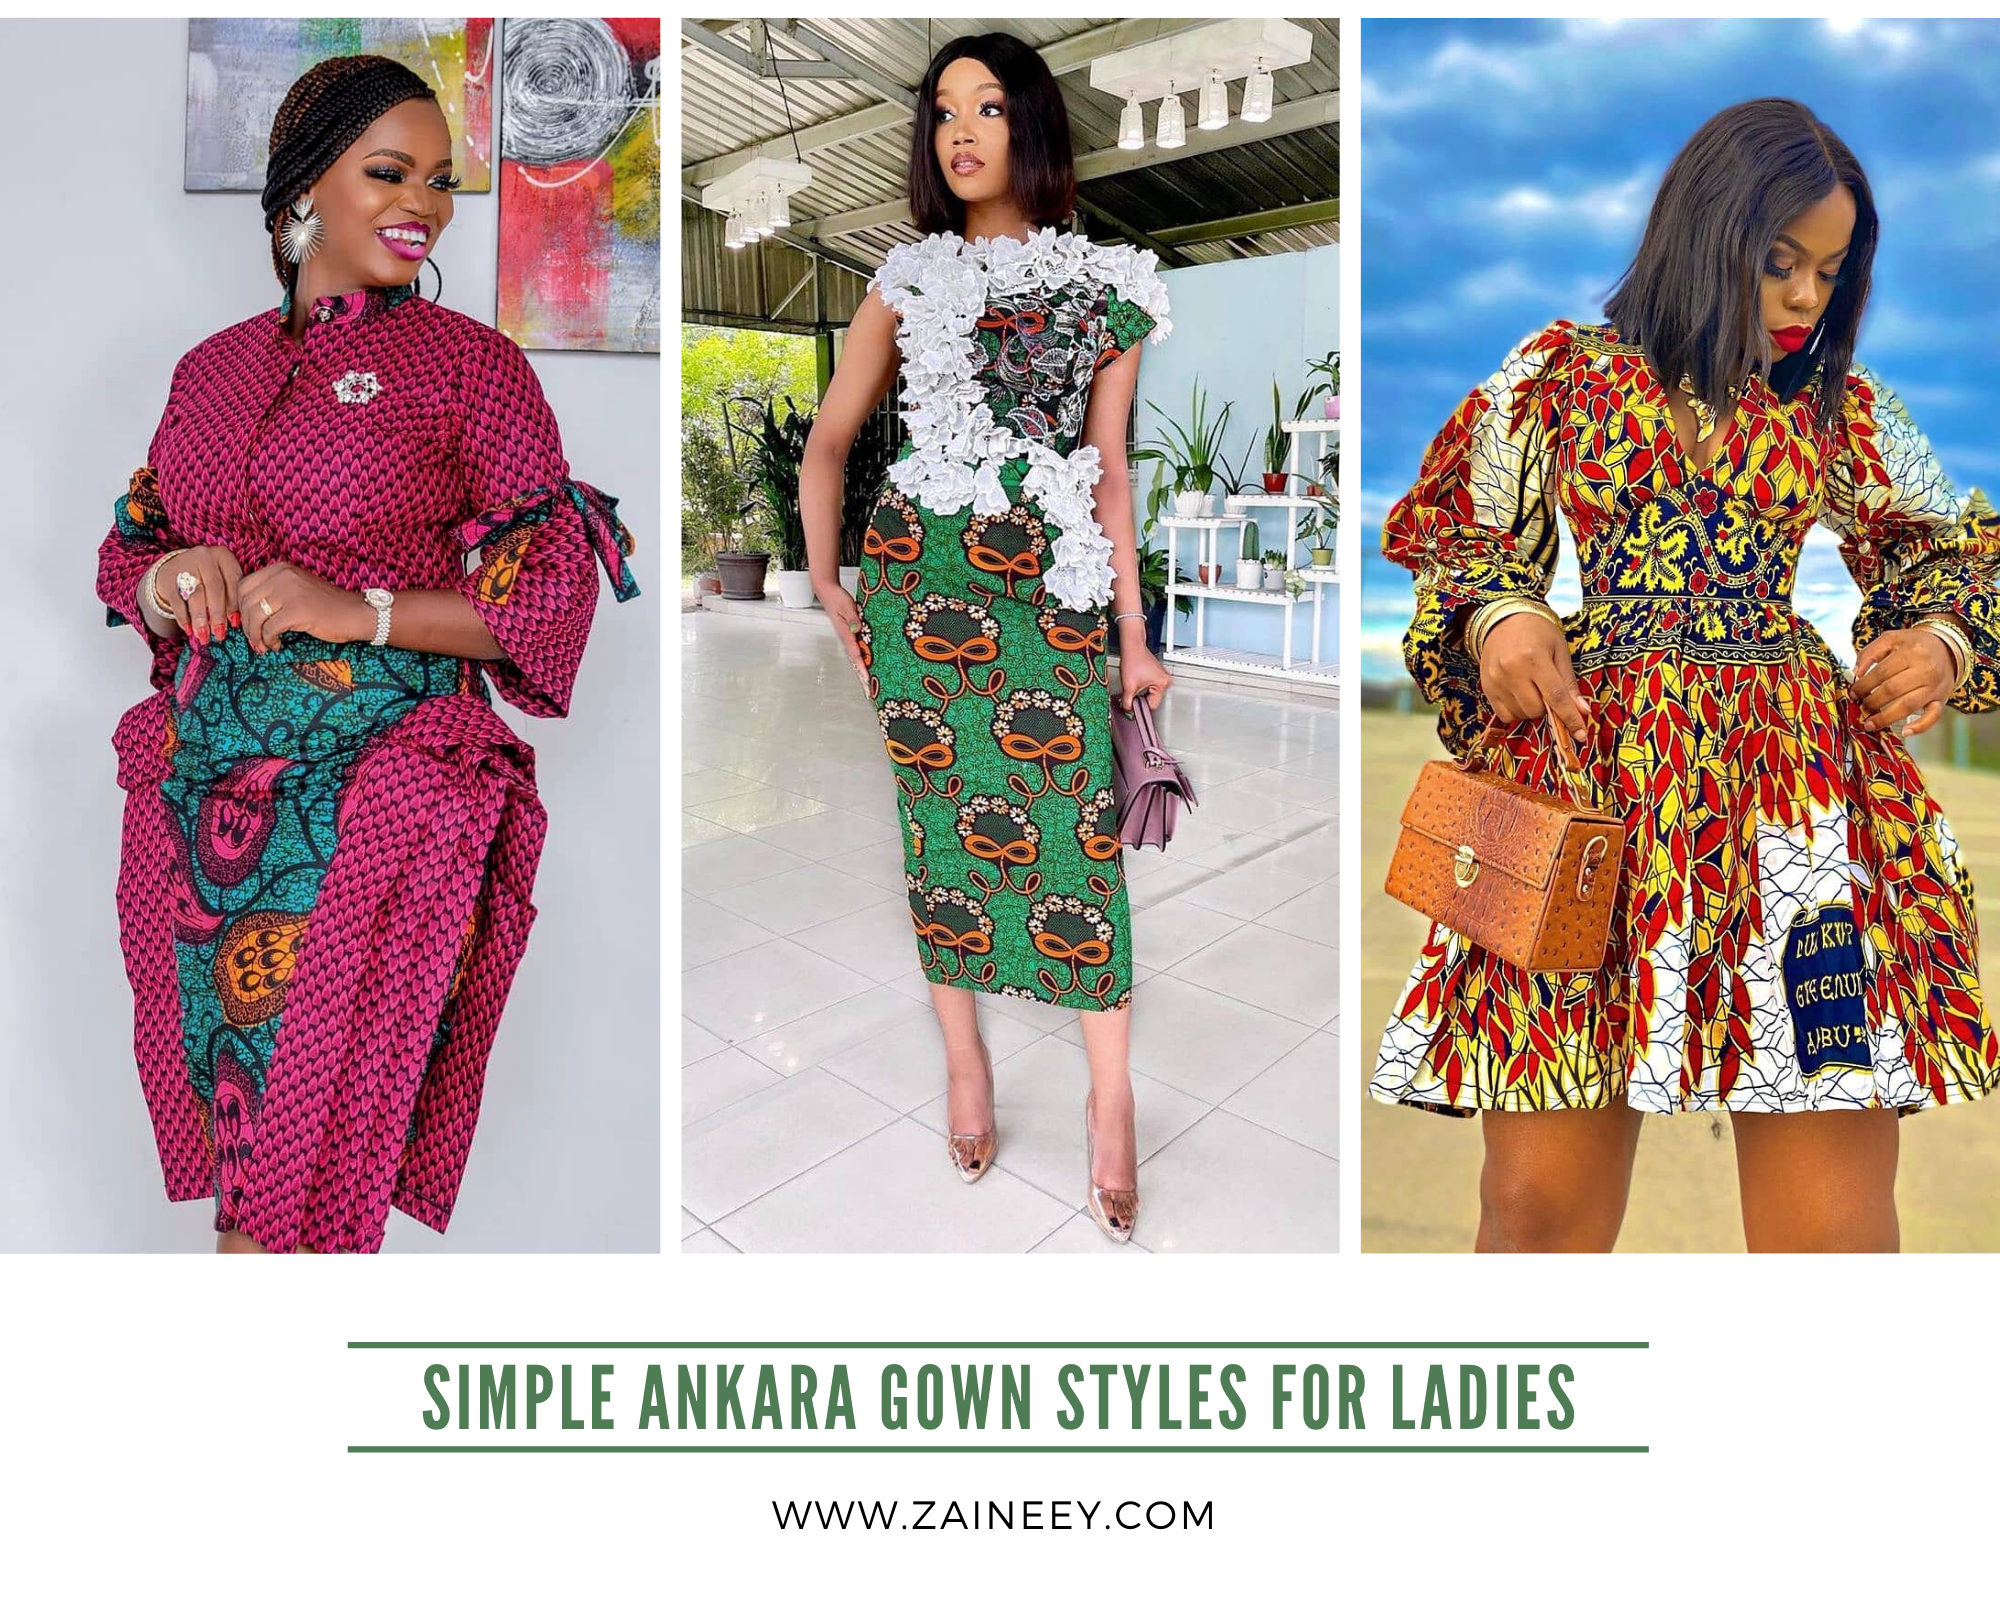 Simple Ankara Gown Styles for Ladies 2021